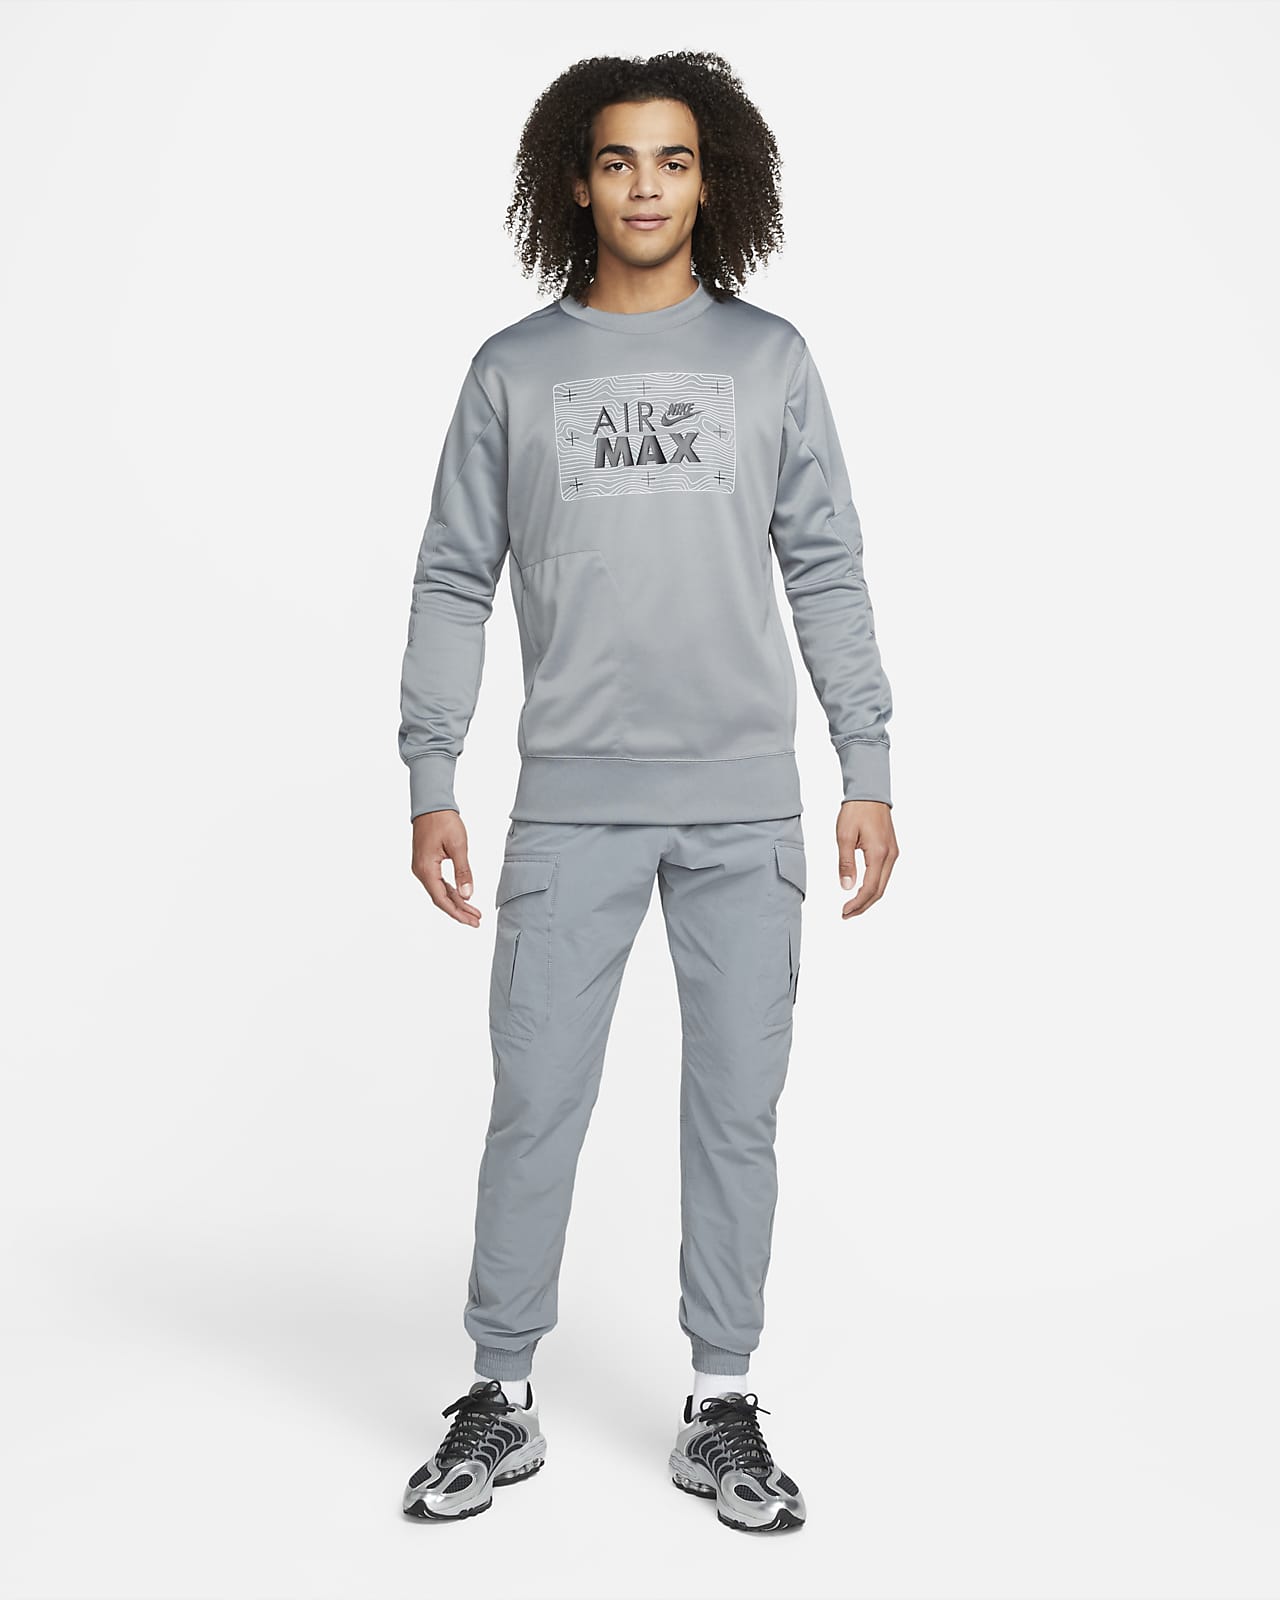 Nike Sportswear Air Max Men's Sweatshirt. Nike GB